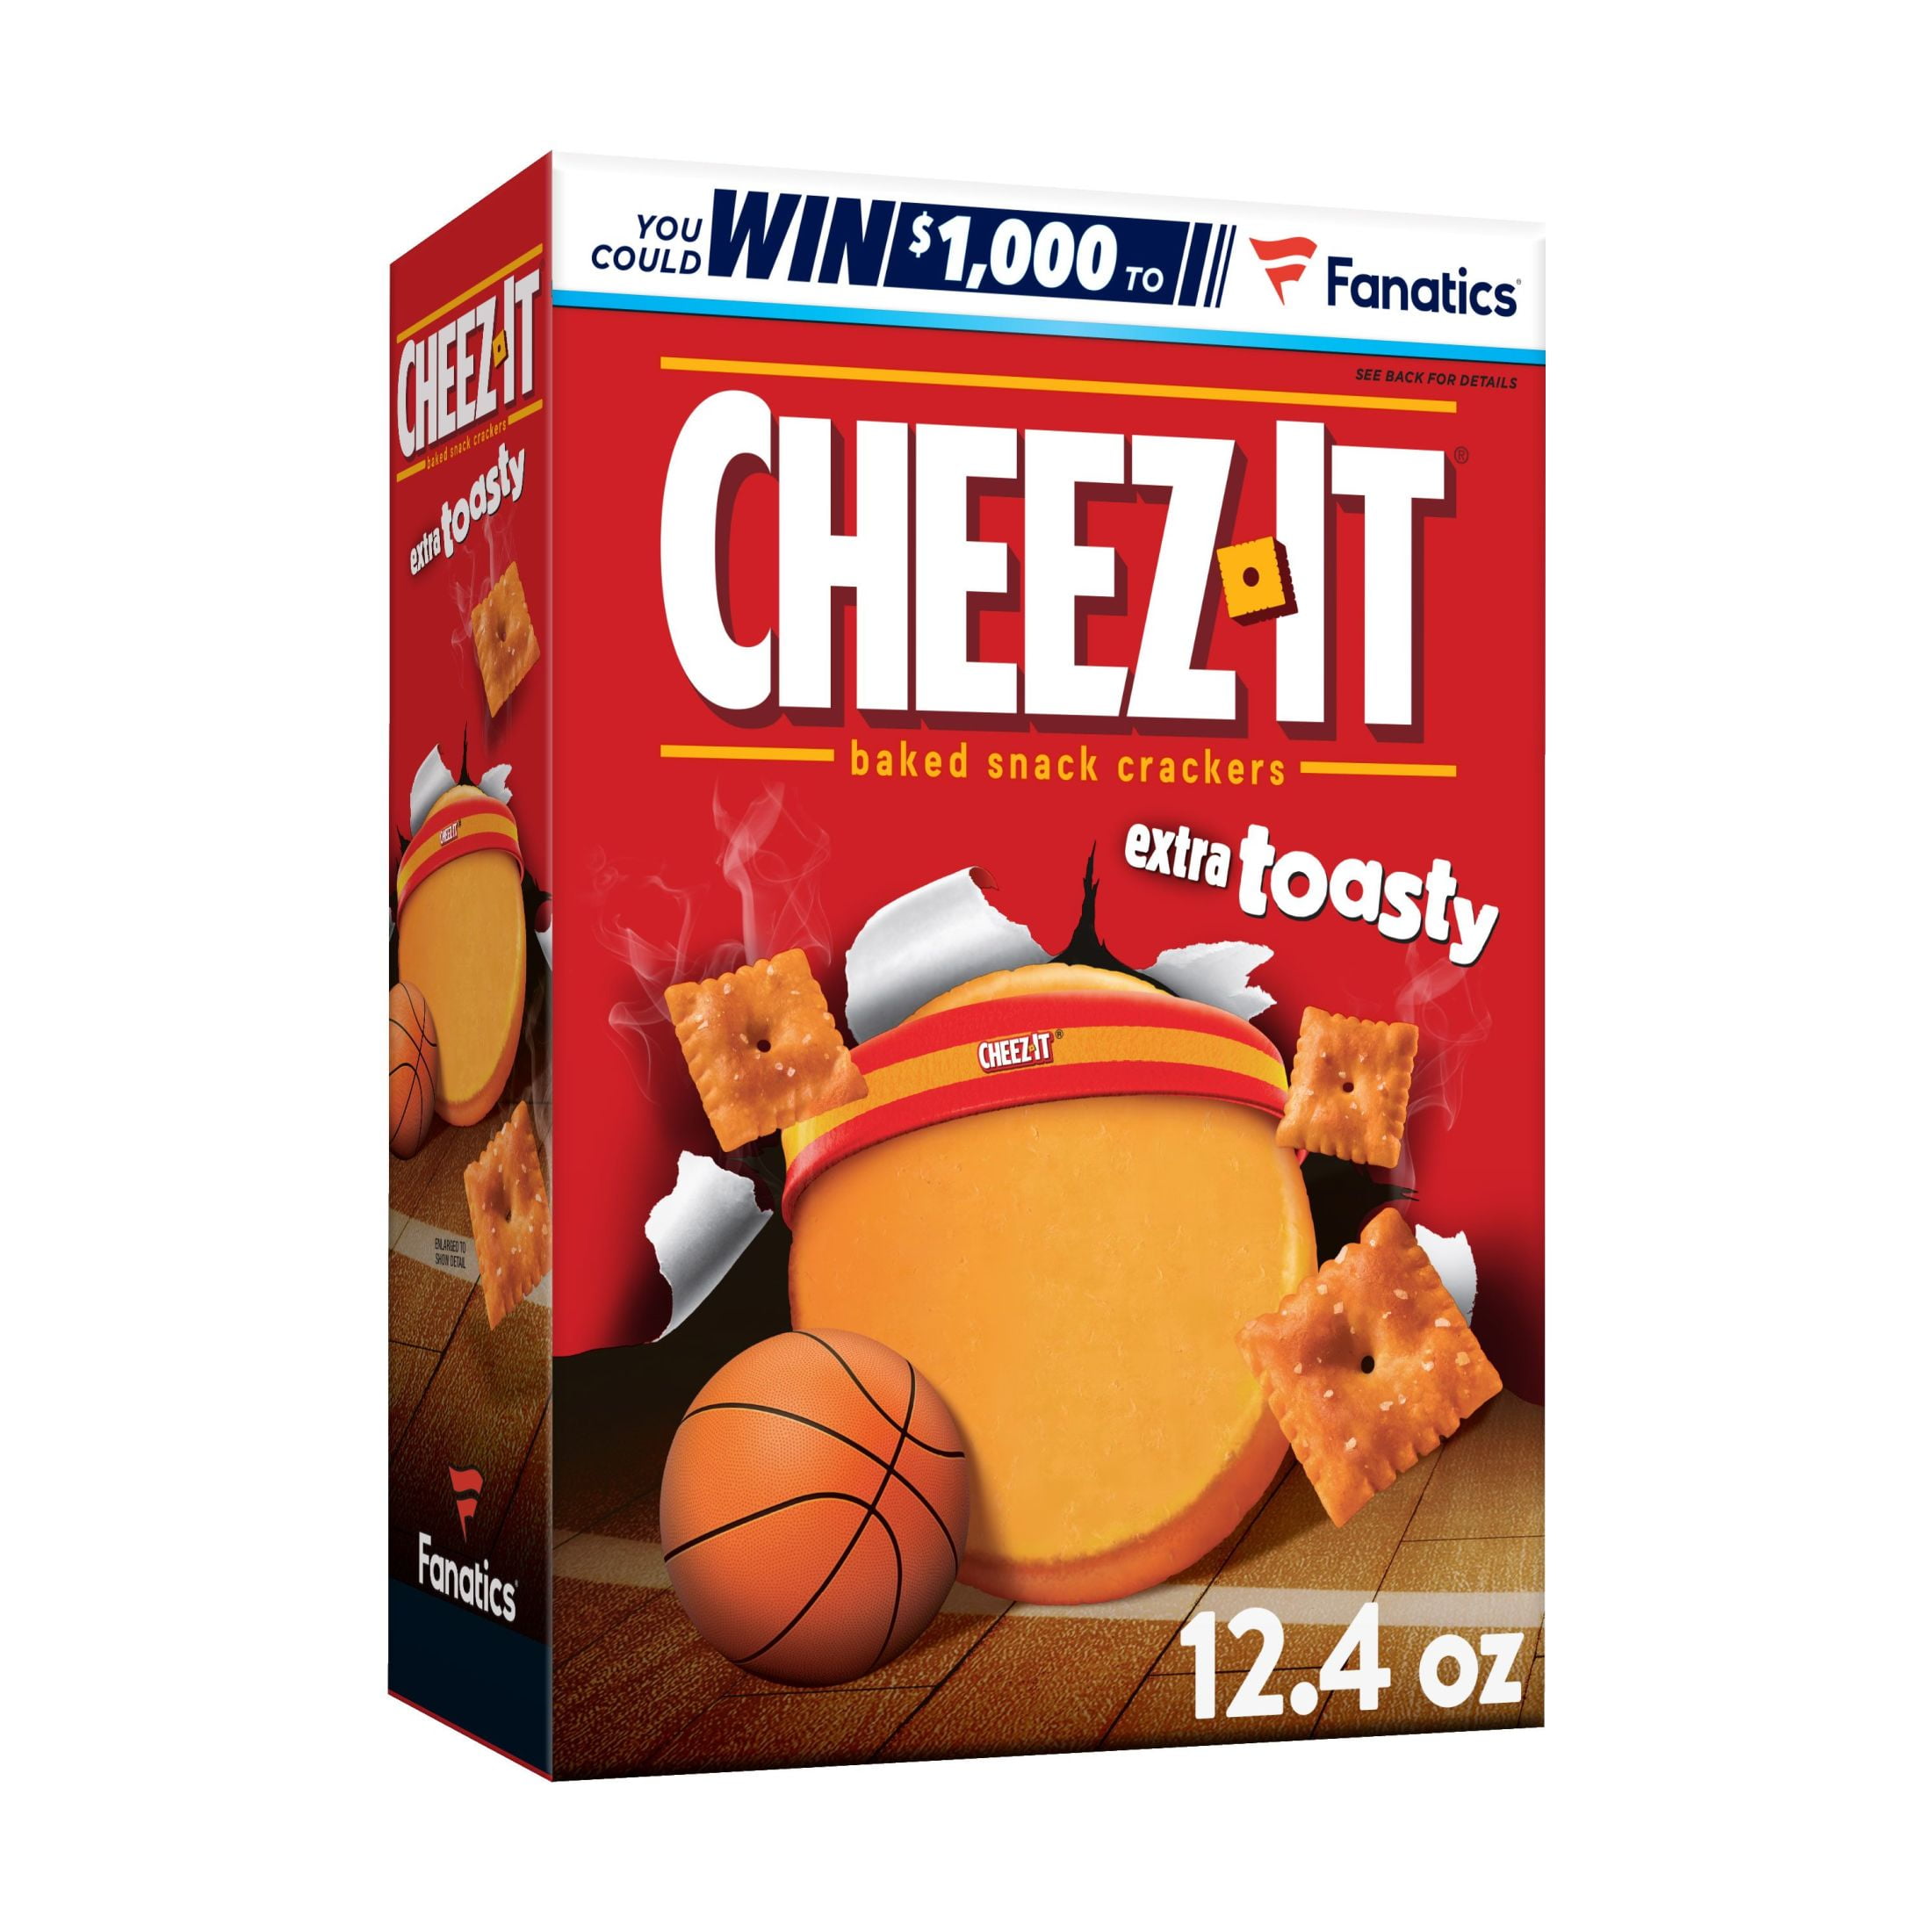 Cheez-It Extra Toasty Cheese Crackers, 12.4 oz